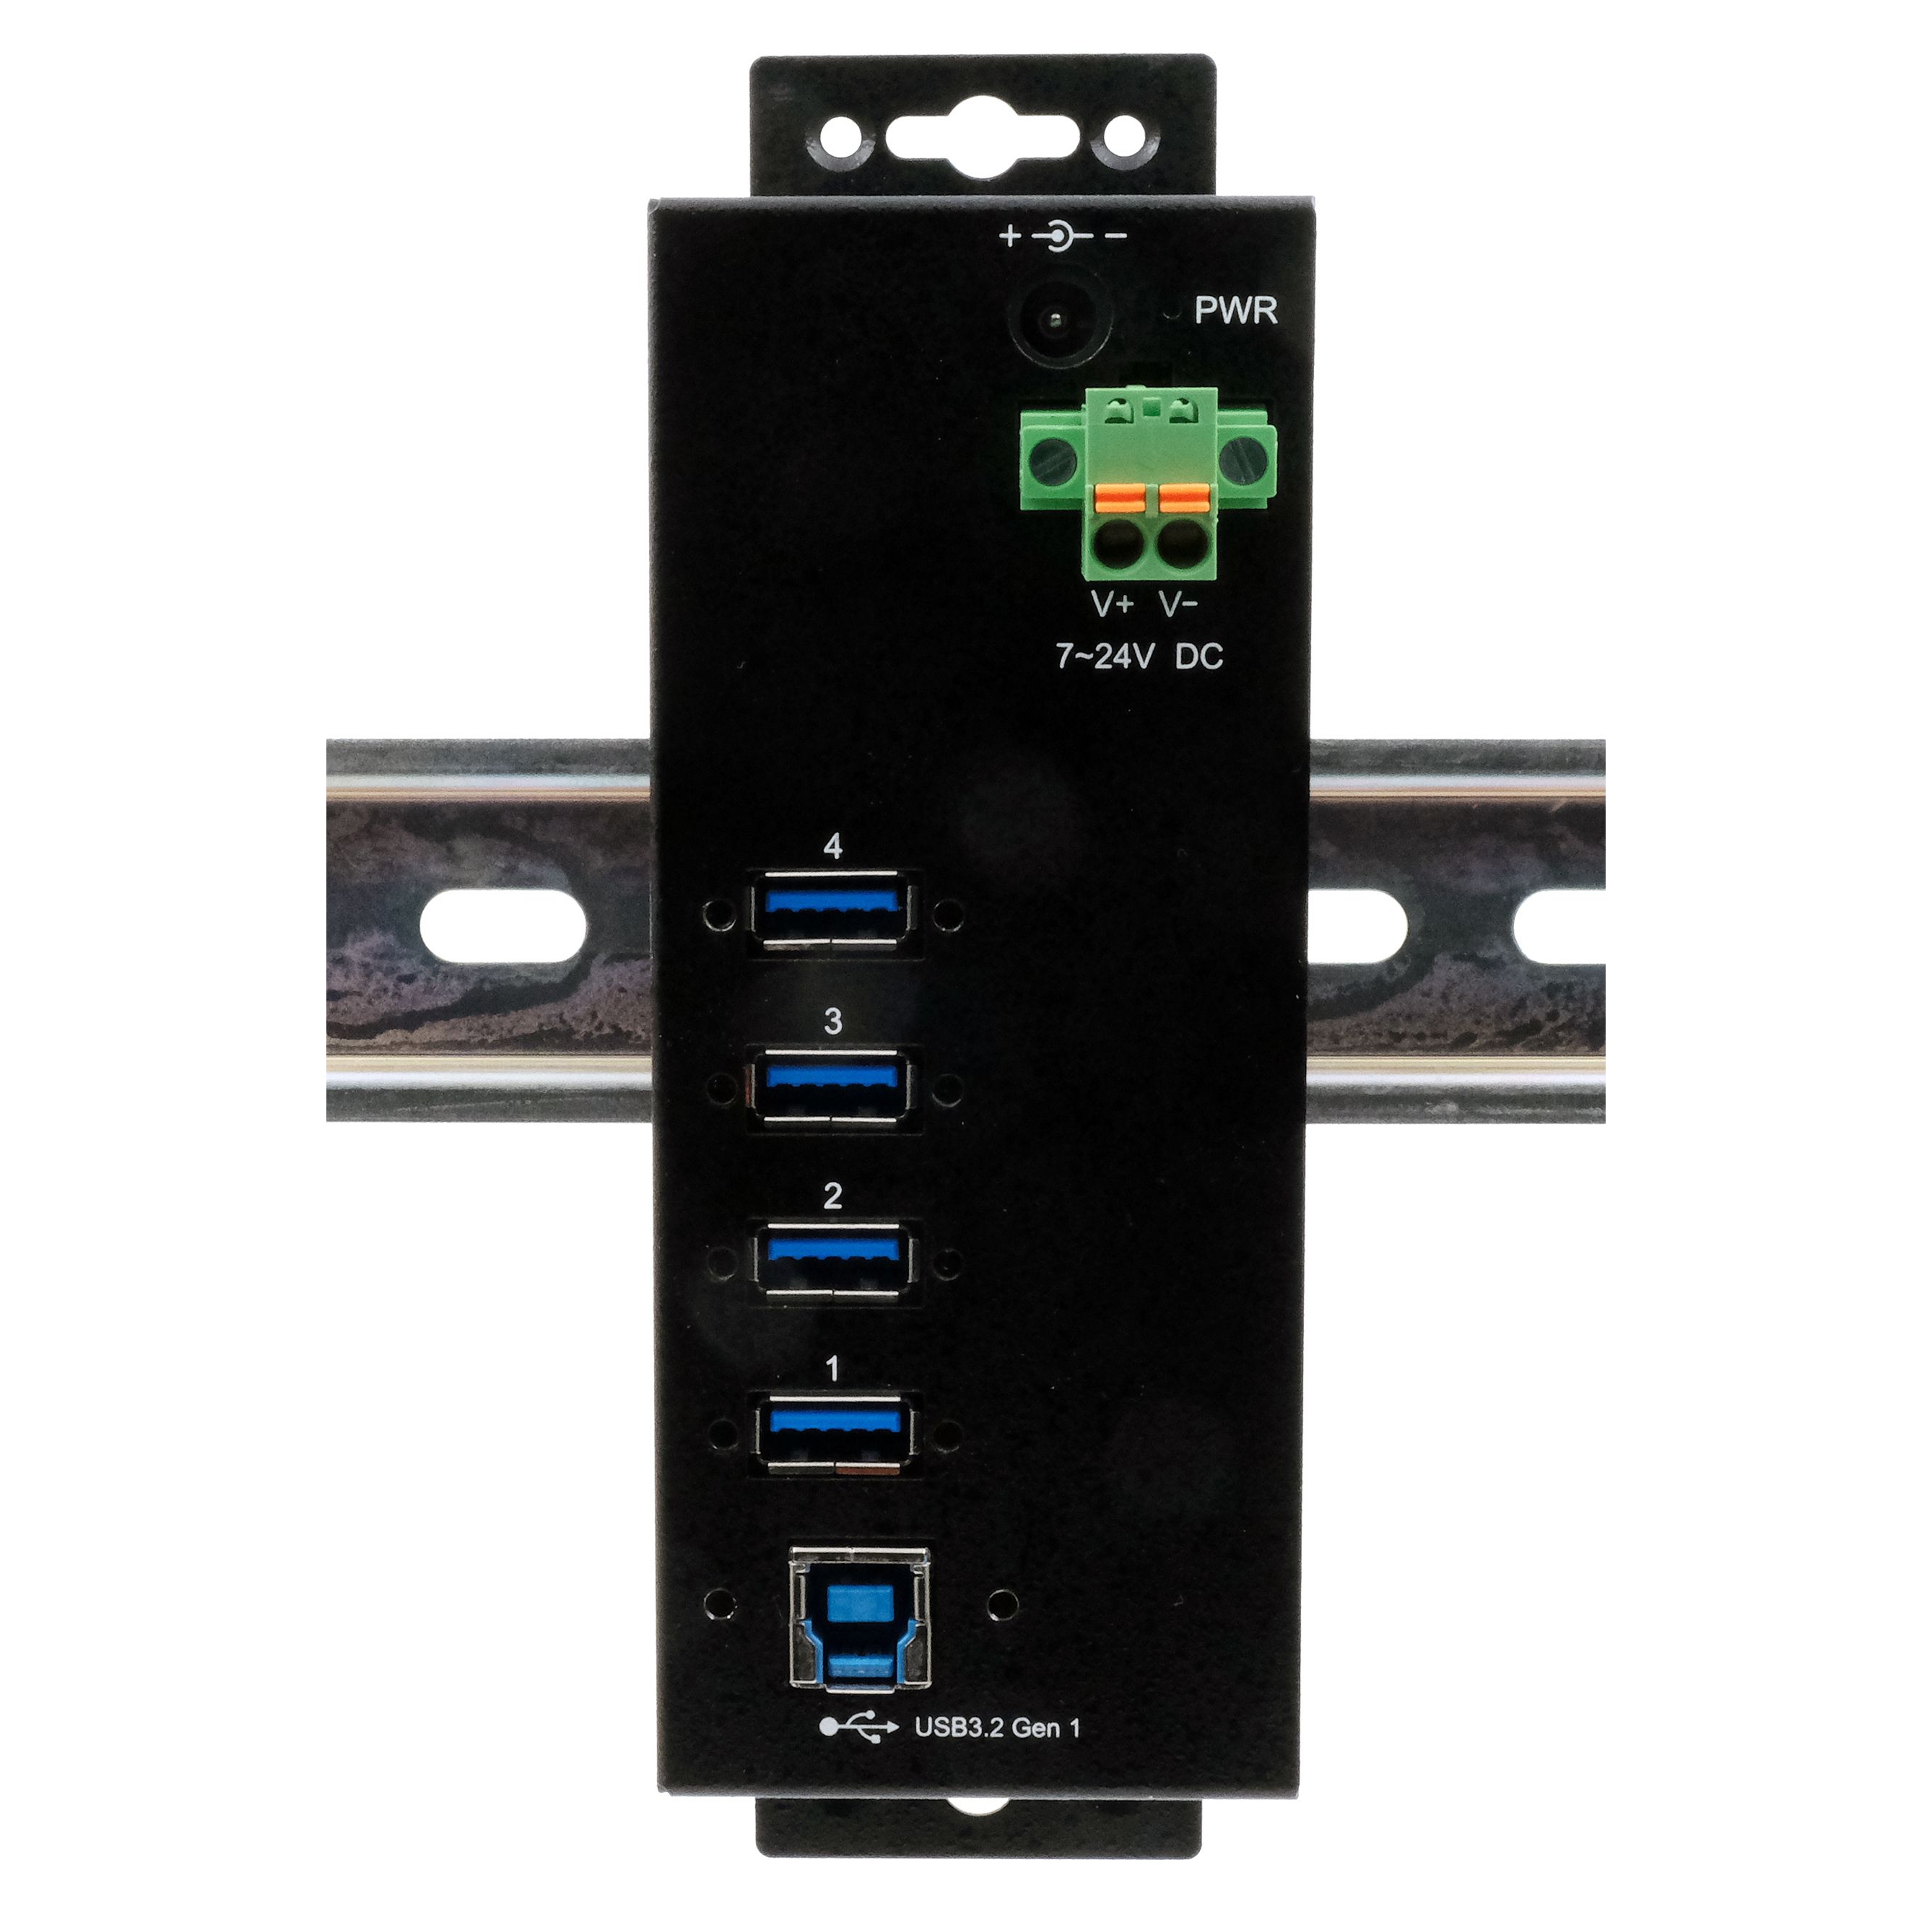 USB 3.0 HUB avec 4 ports, version DIN RAIL, boîtier métallique, EX-1186HMVS-2